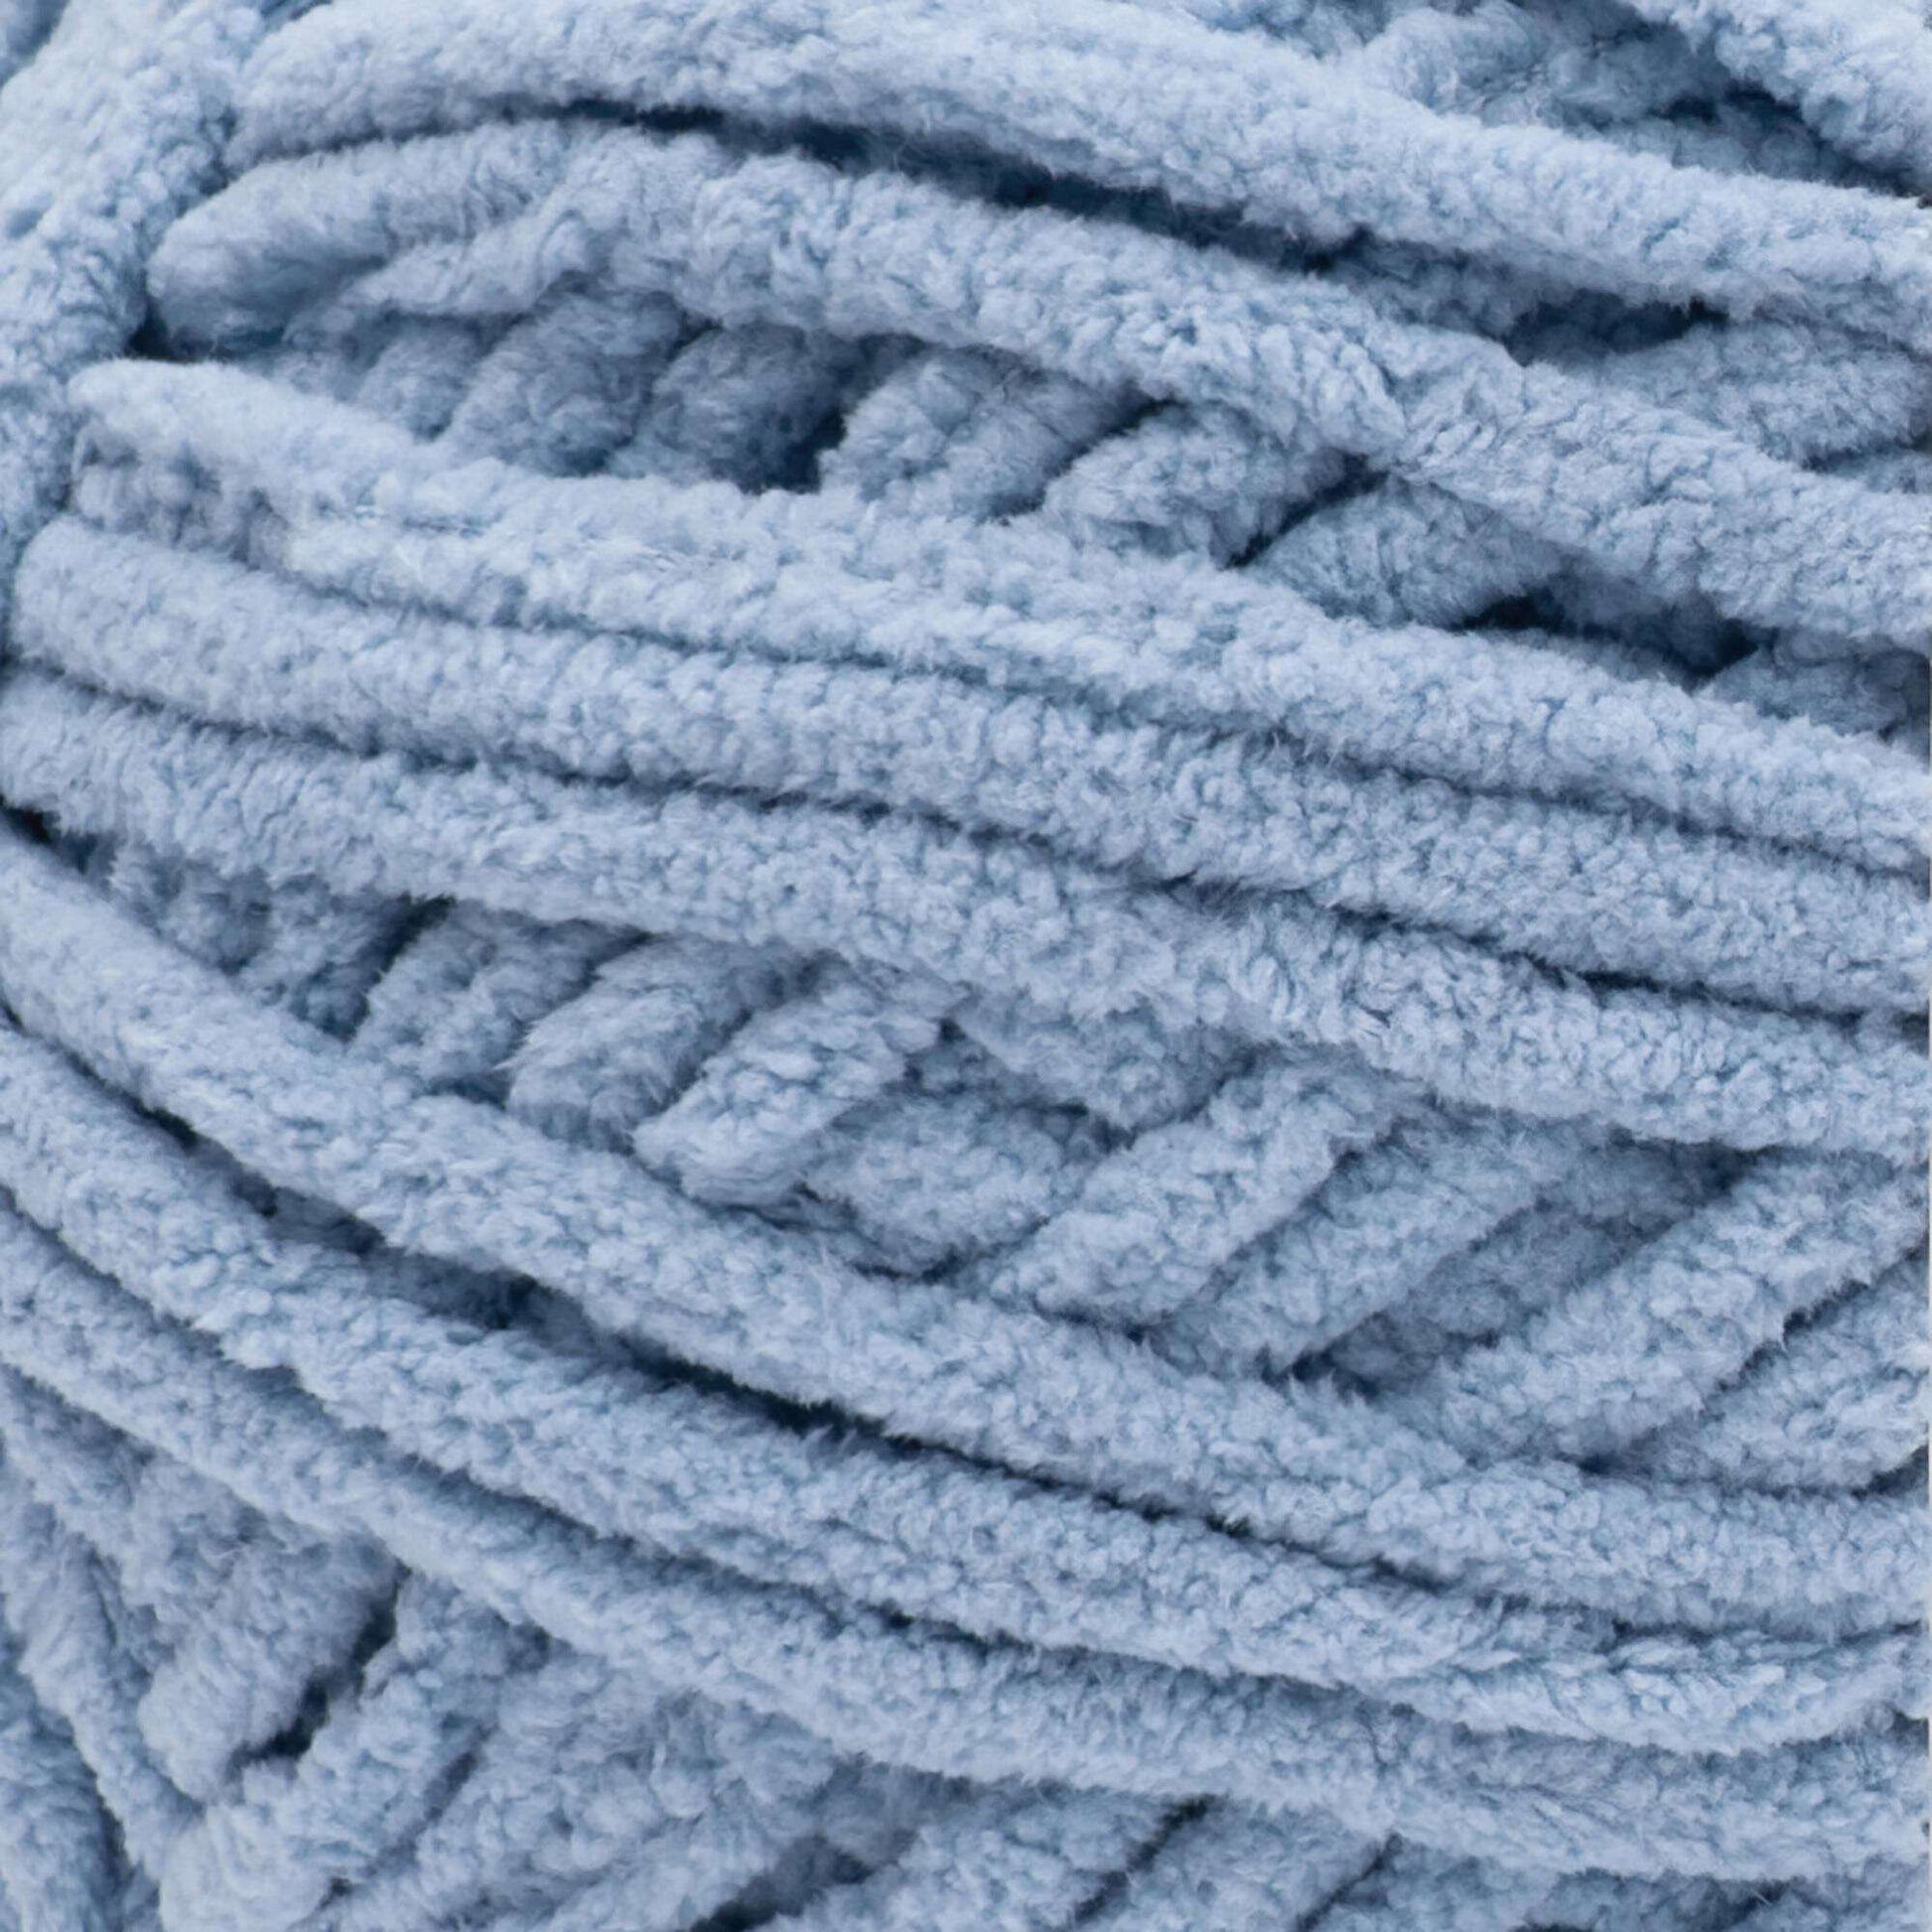 Bernat Baby Blanket Yarn (300g/10.5oz) - Discontinued Shades